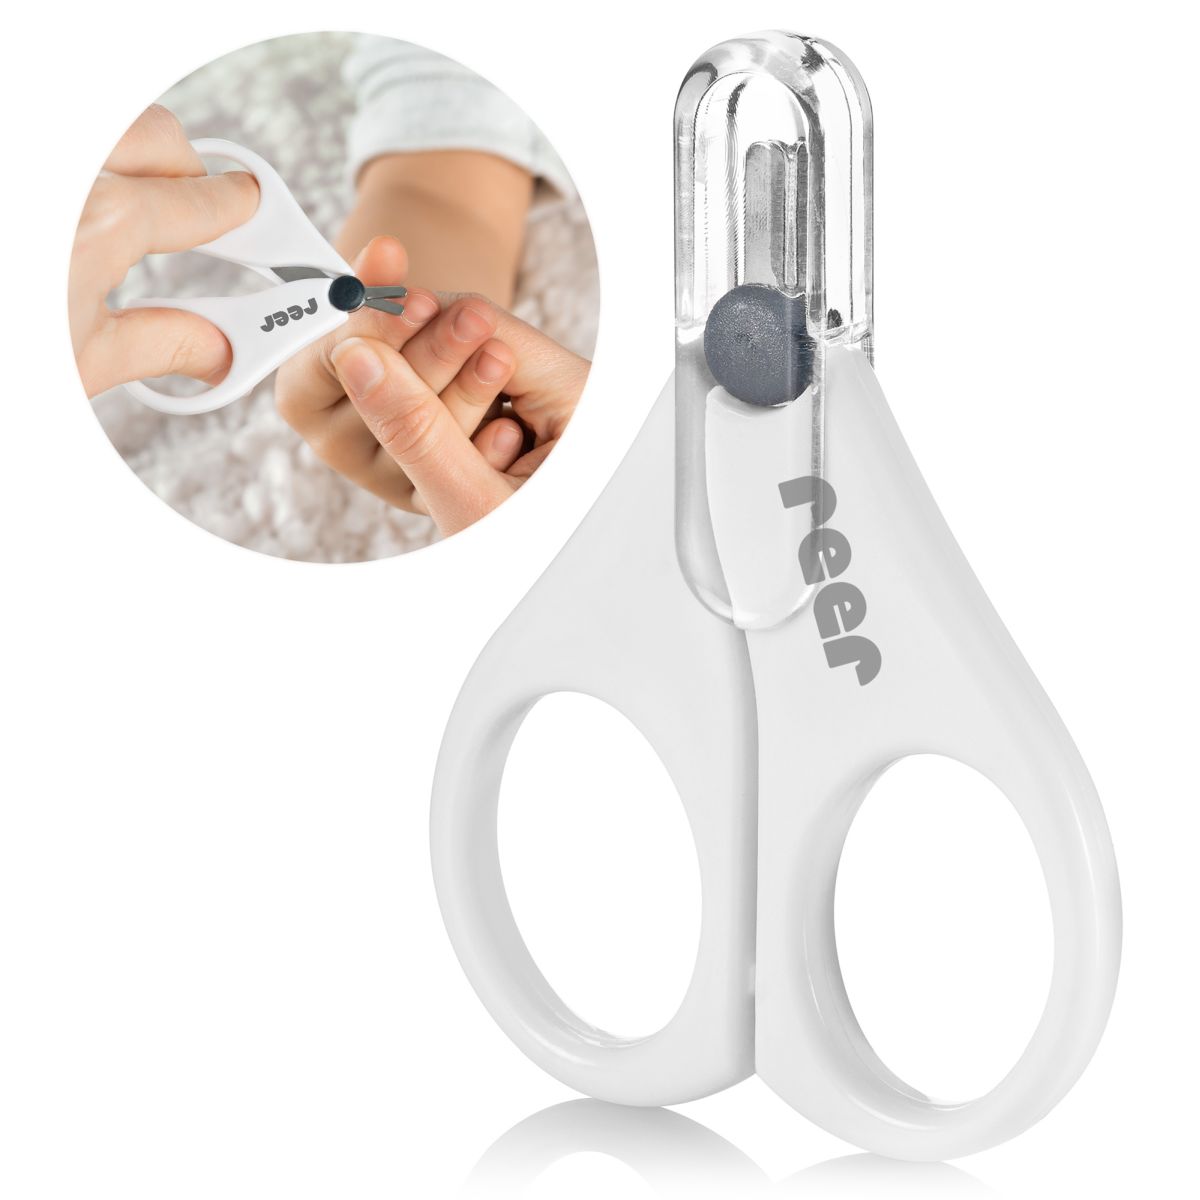 BabyCare baby nail scissors